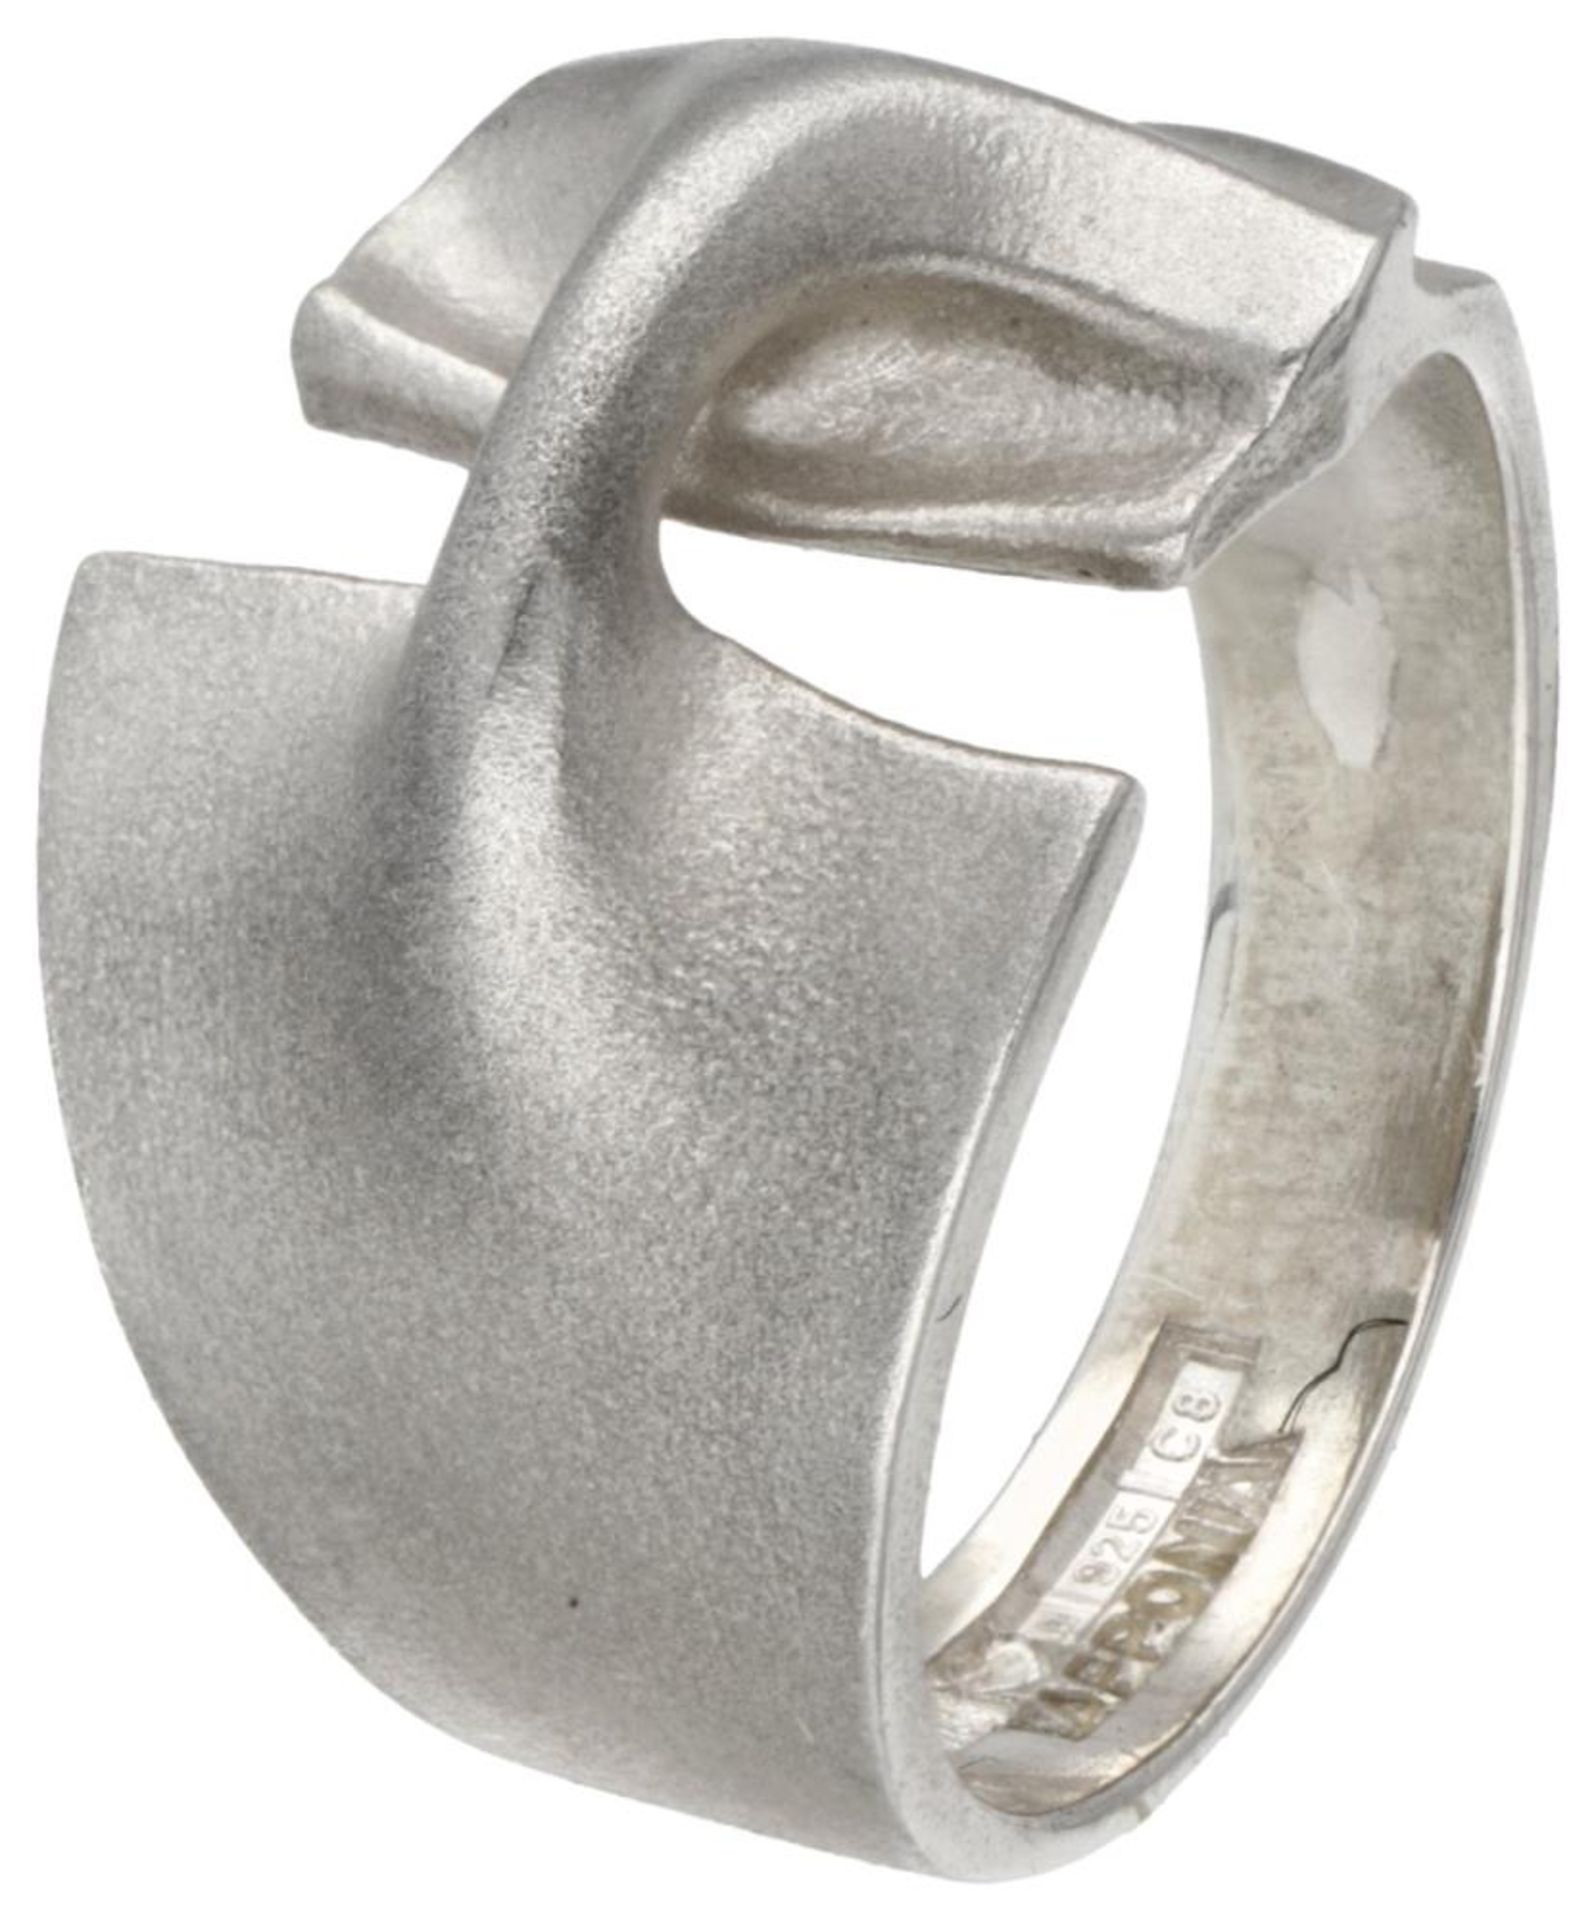 Sterling silver 'Styks' ring by Björn Weckström for Lapponia.